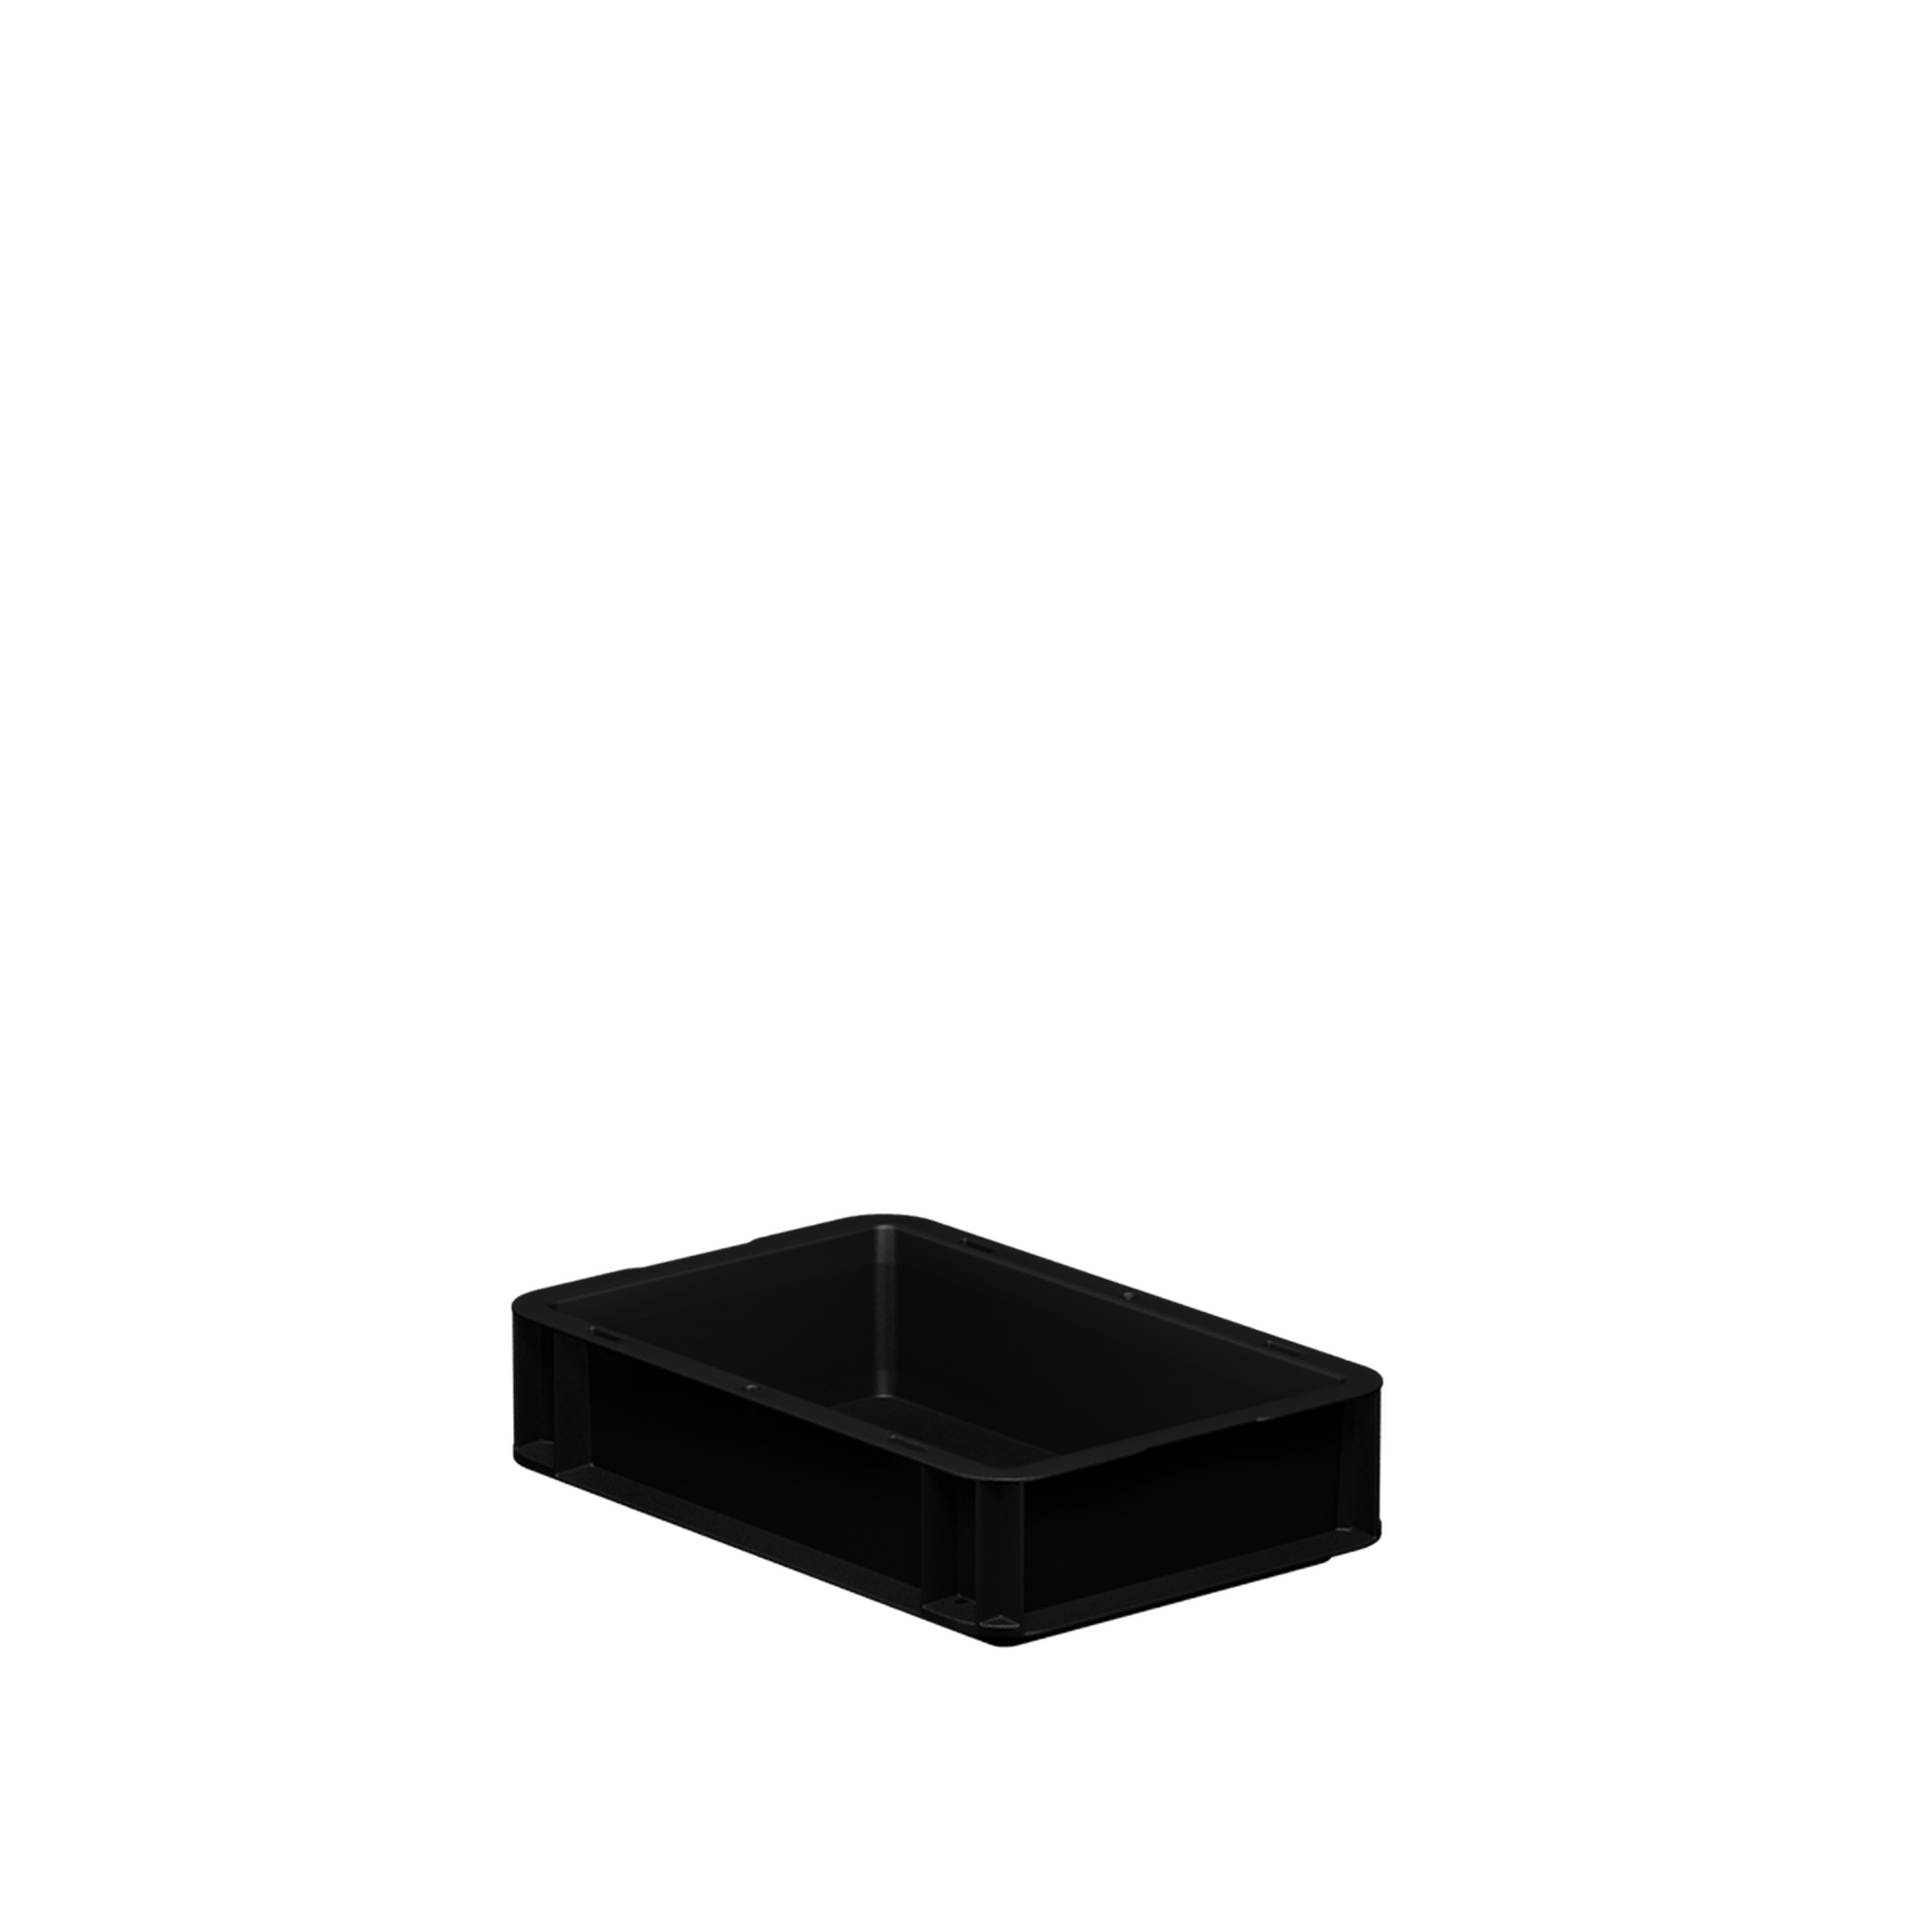 Eurobox 'B' geschlossen schwarz 30 x 20 x 0,7 cm 2,9 l + product picture